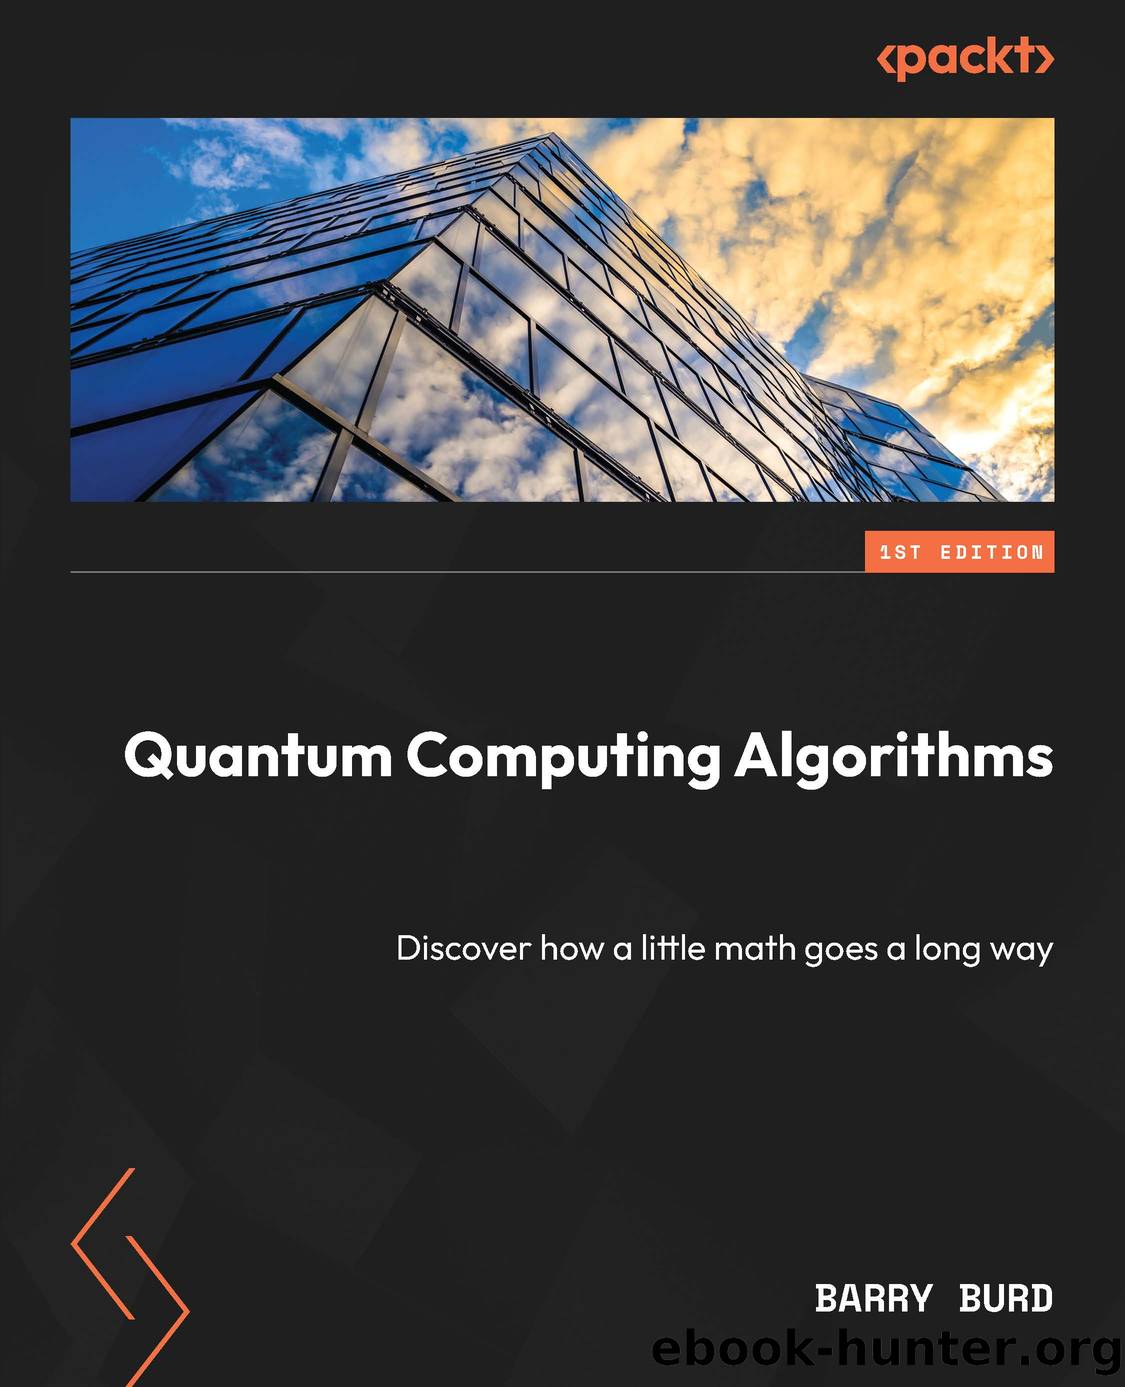 Quantum Computing Algorithms by Barry Burd